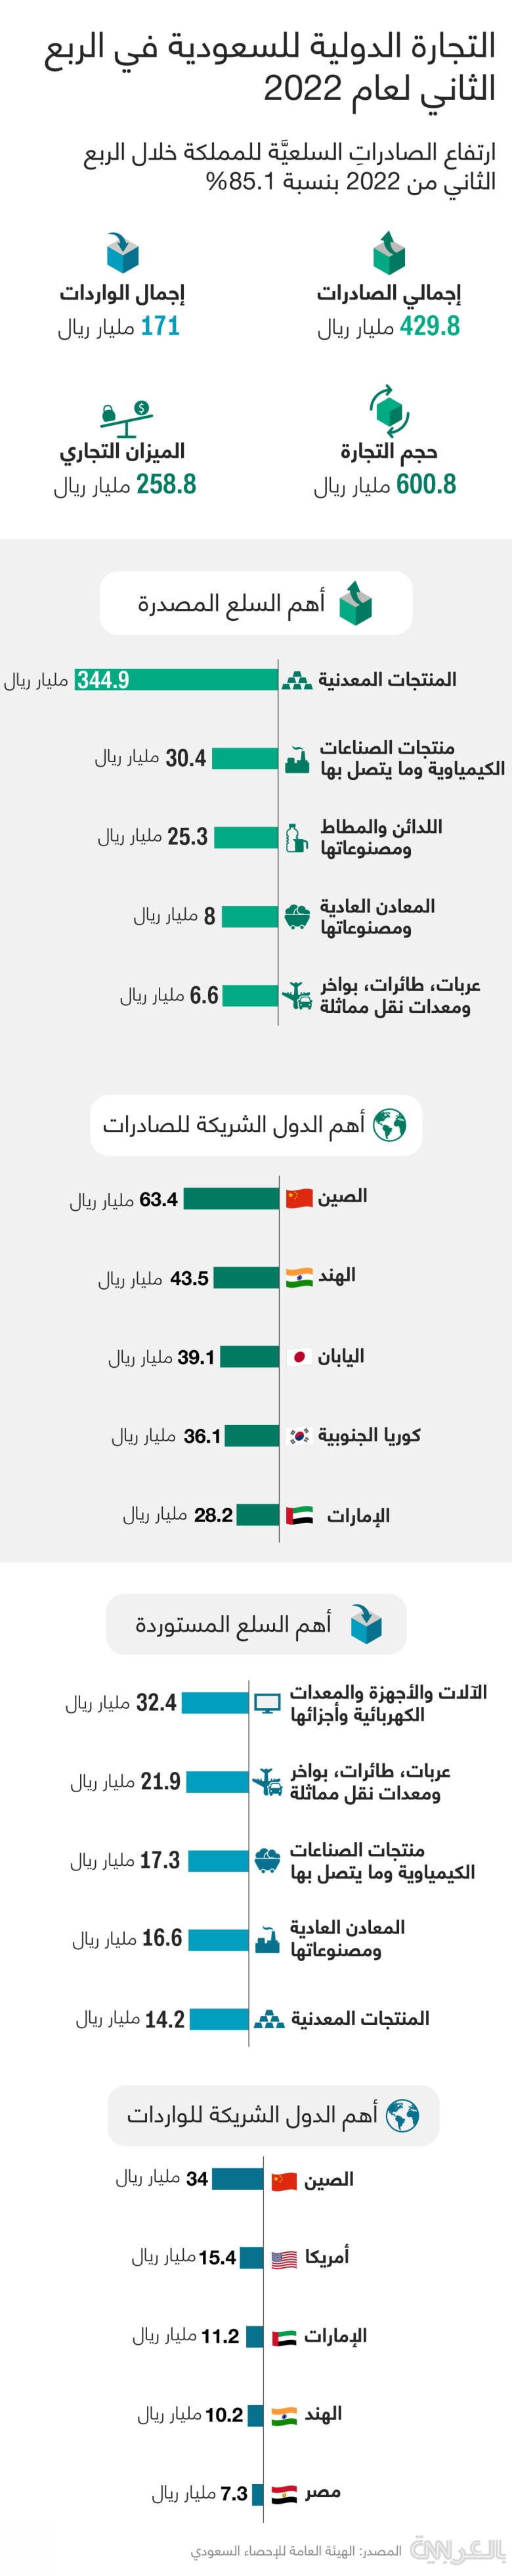 Saudi-exports-imports-rise-Q2